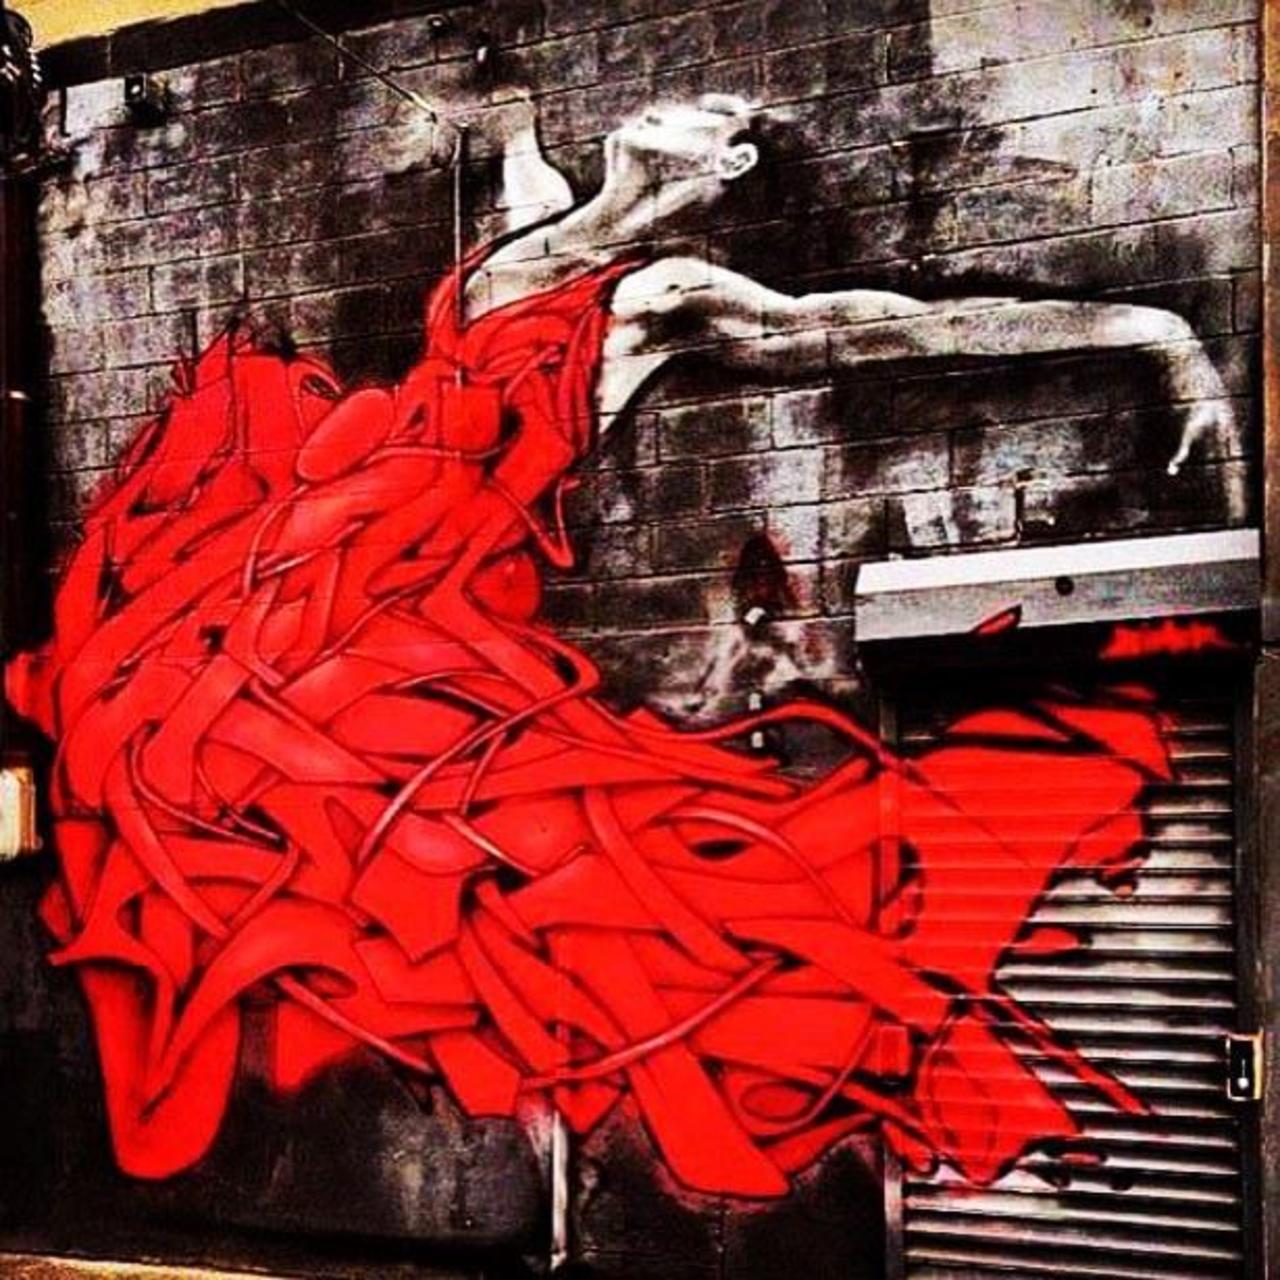 RT @artpushr: via #samolisantos "http://bit.ly/1M3XeTH" #graffiti #streetart http://t.co/s3zc2LoKST